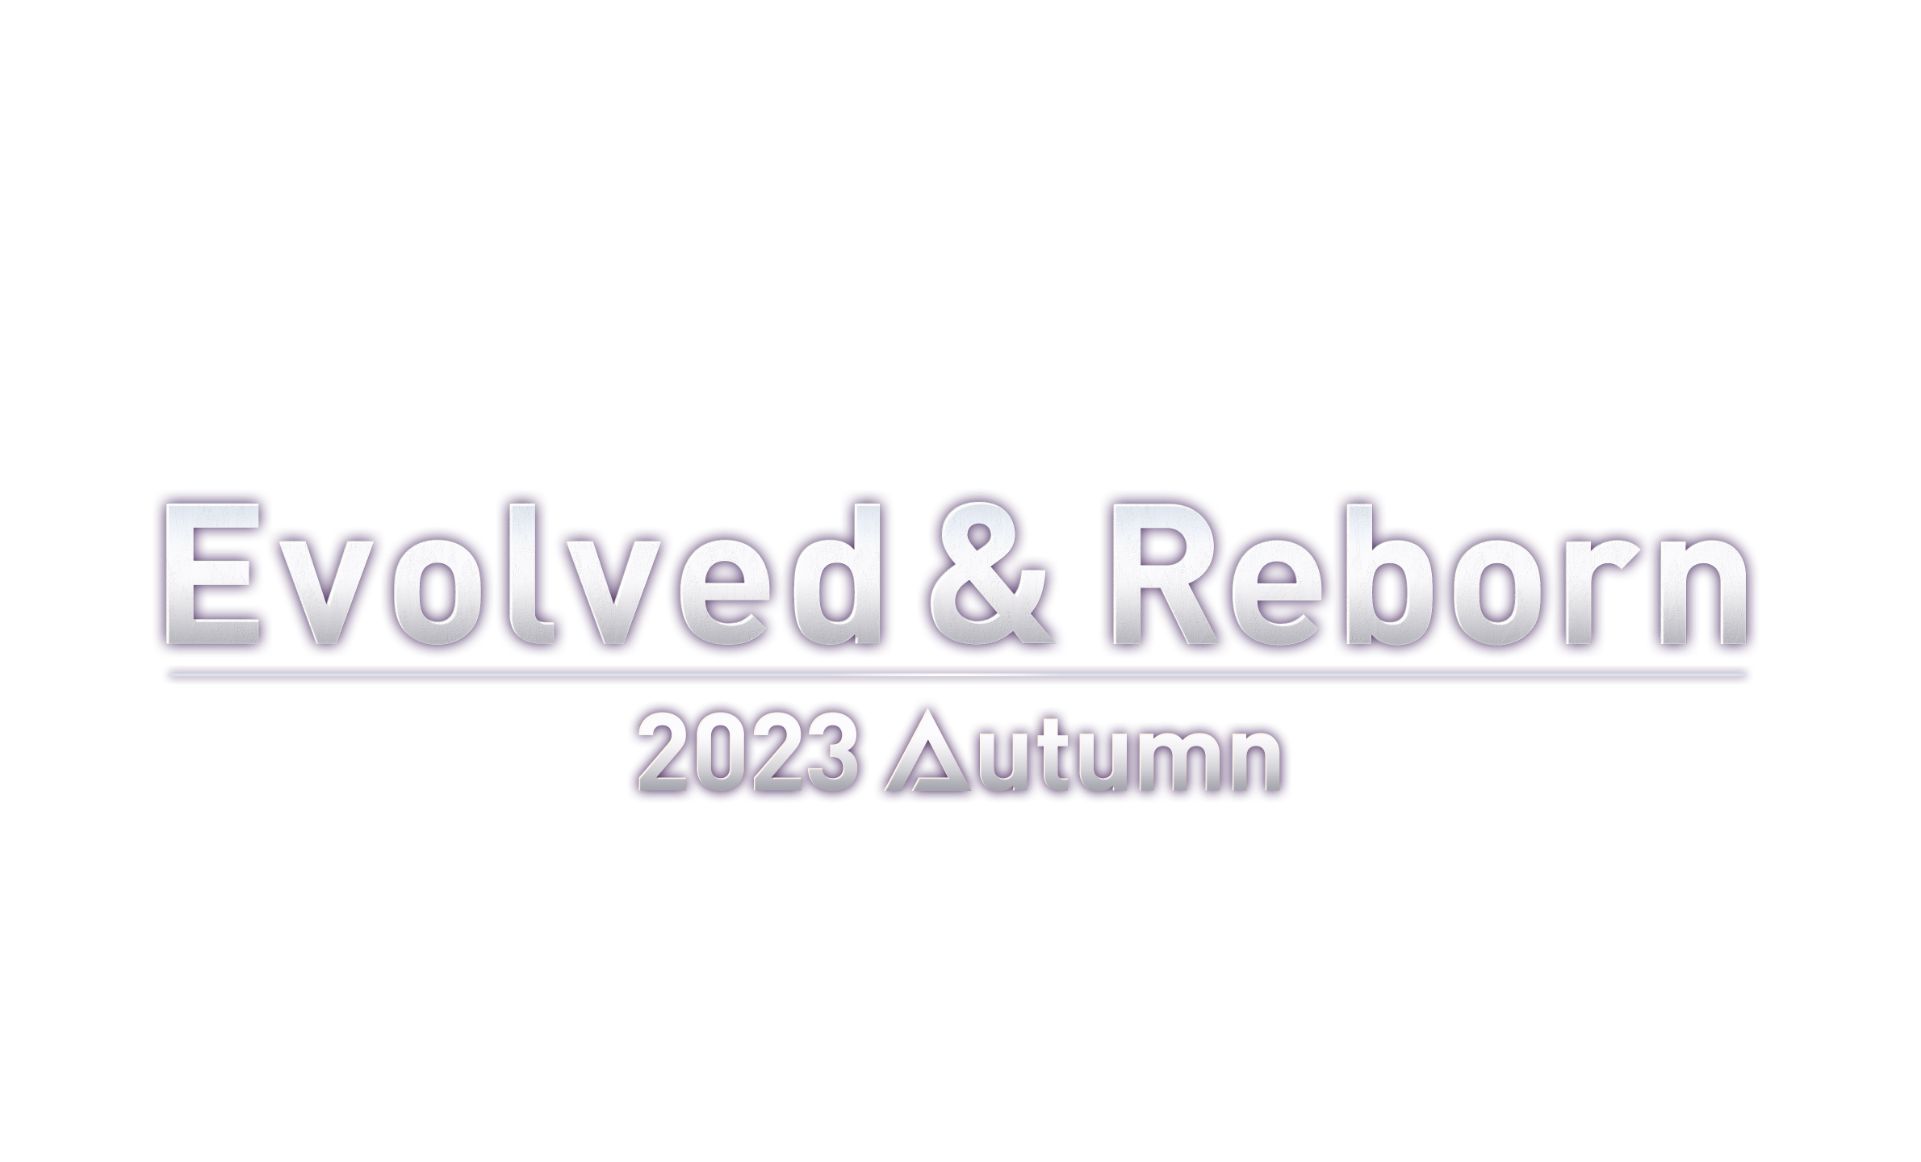 Evolved & Reborn 2023 Autumn